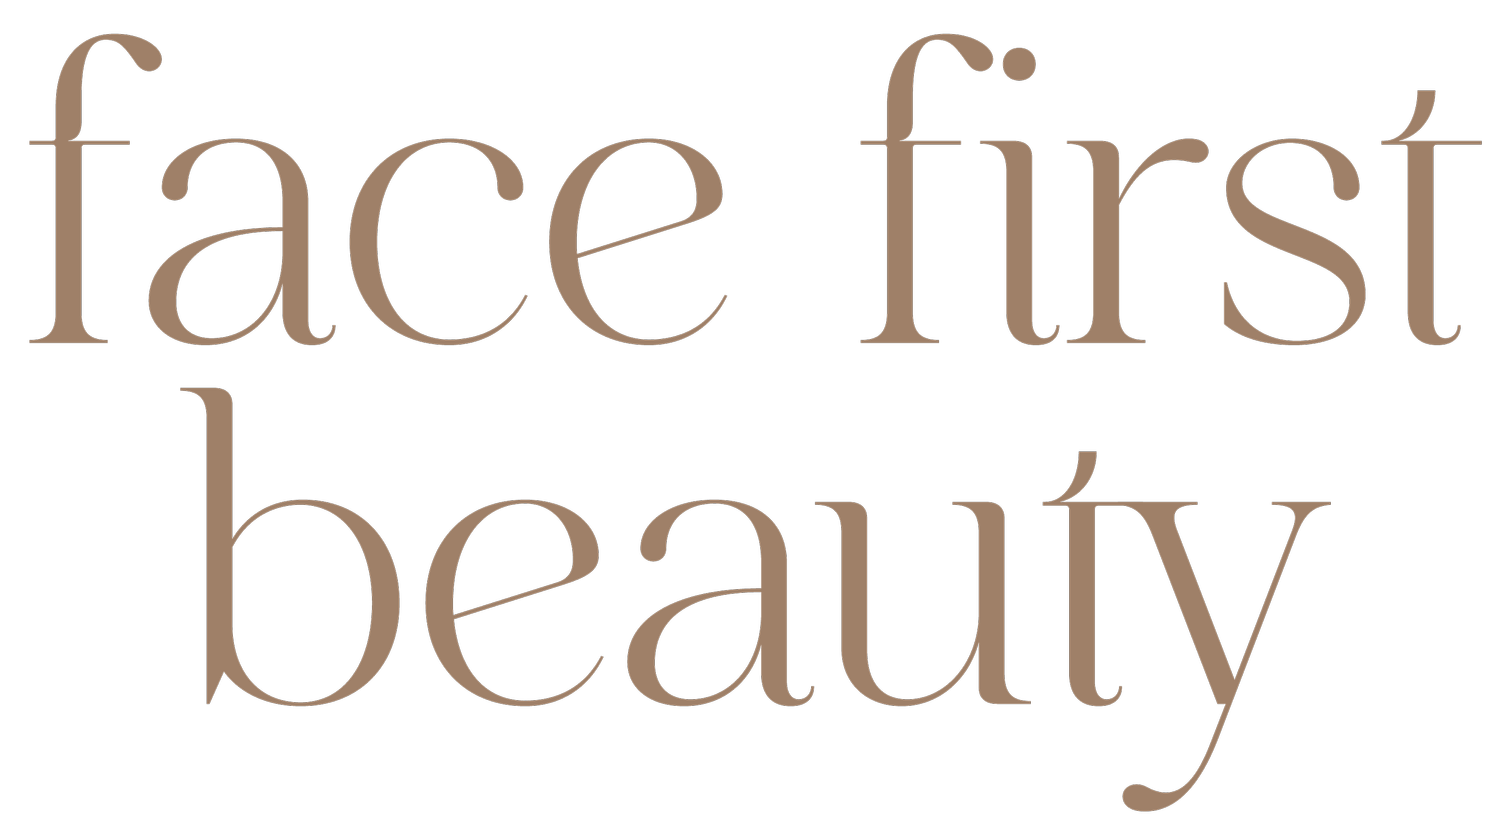 Face First Beauty